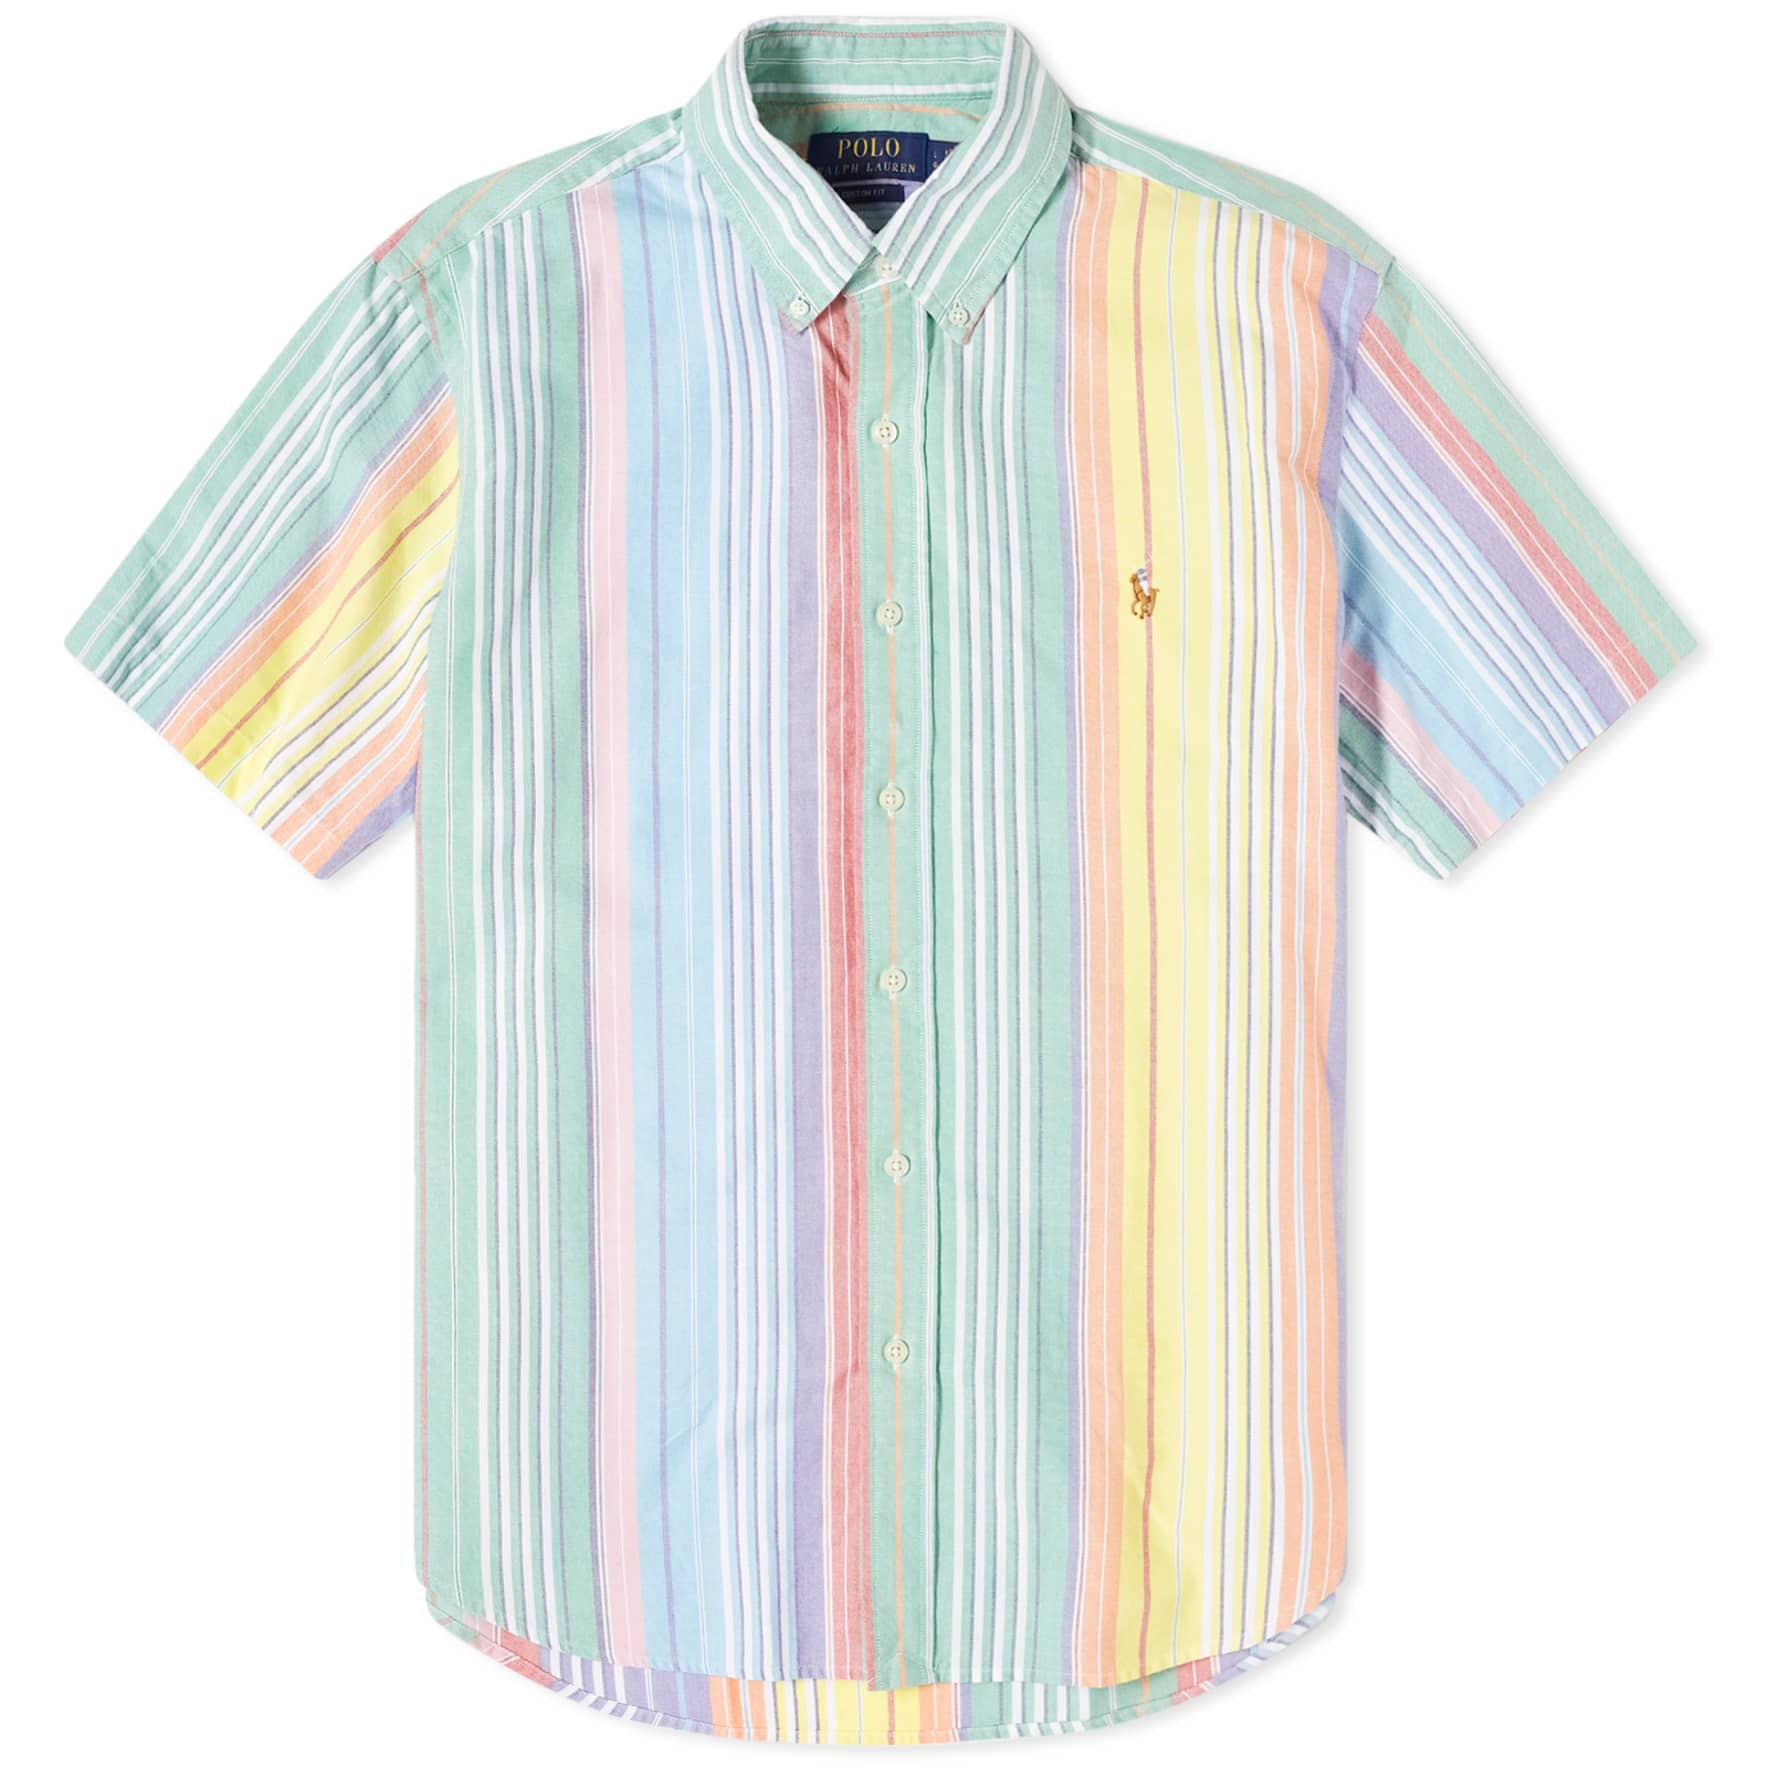 Рубашка Polo Ralph Lauren Stripe Short Sleeve, светло-зеленый/мультиколор